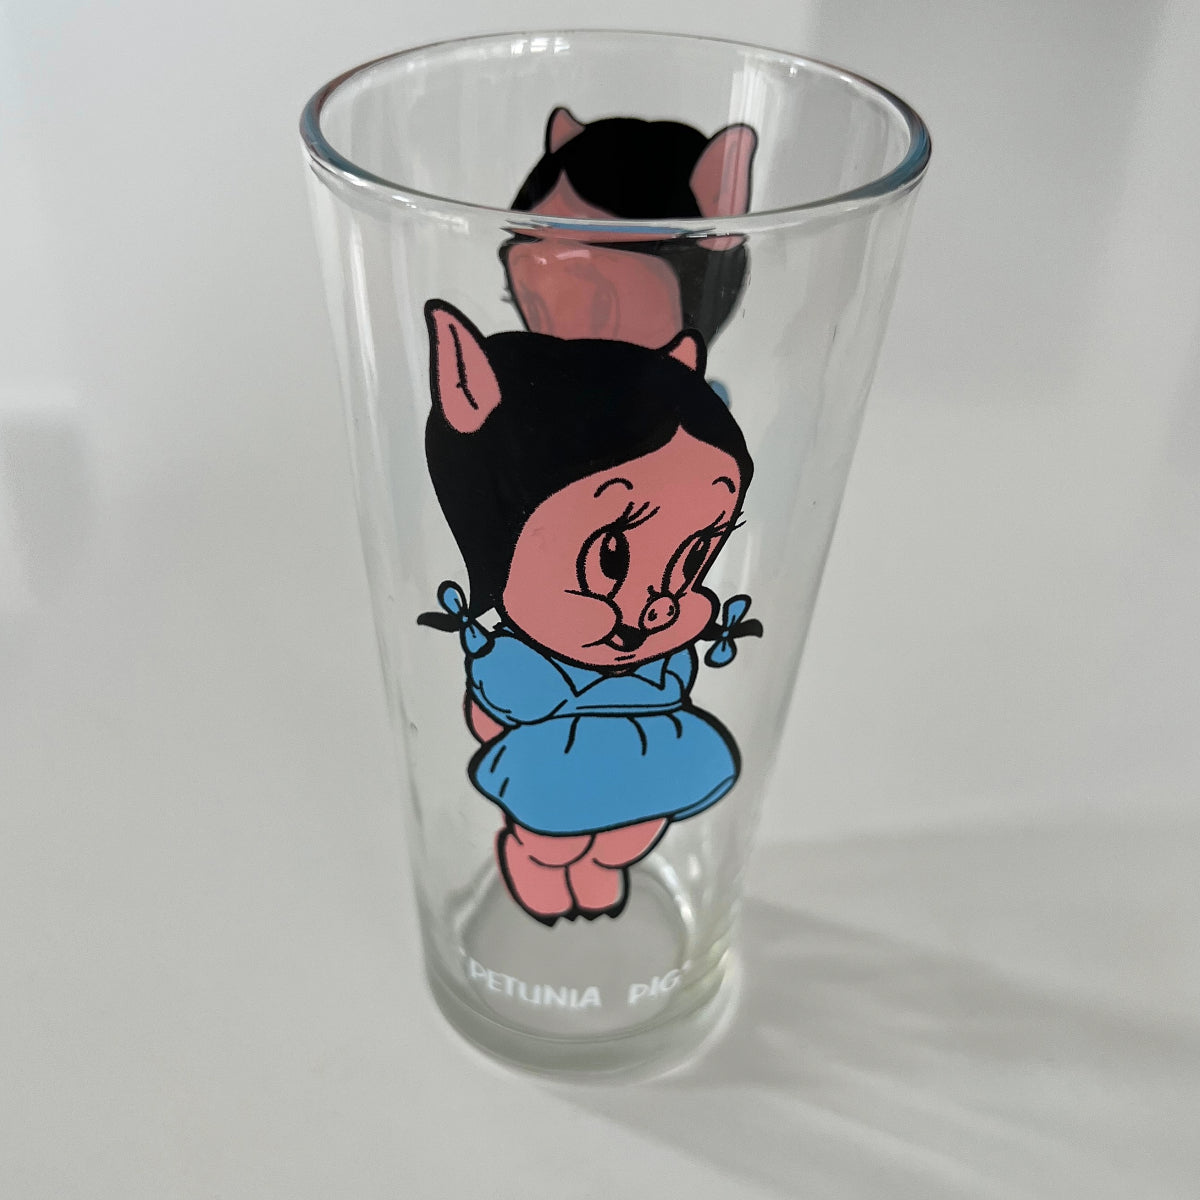 Vintage 1973 Pepsi Looney Tunes Petunia Pig Drinking Glass